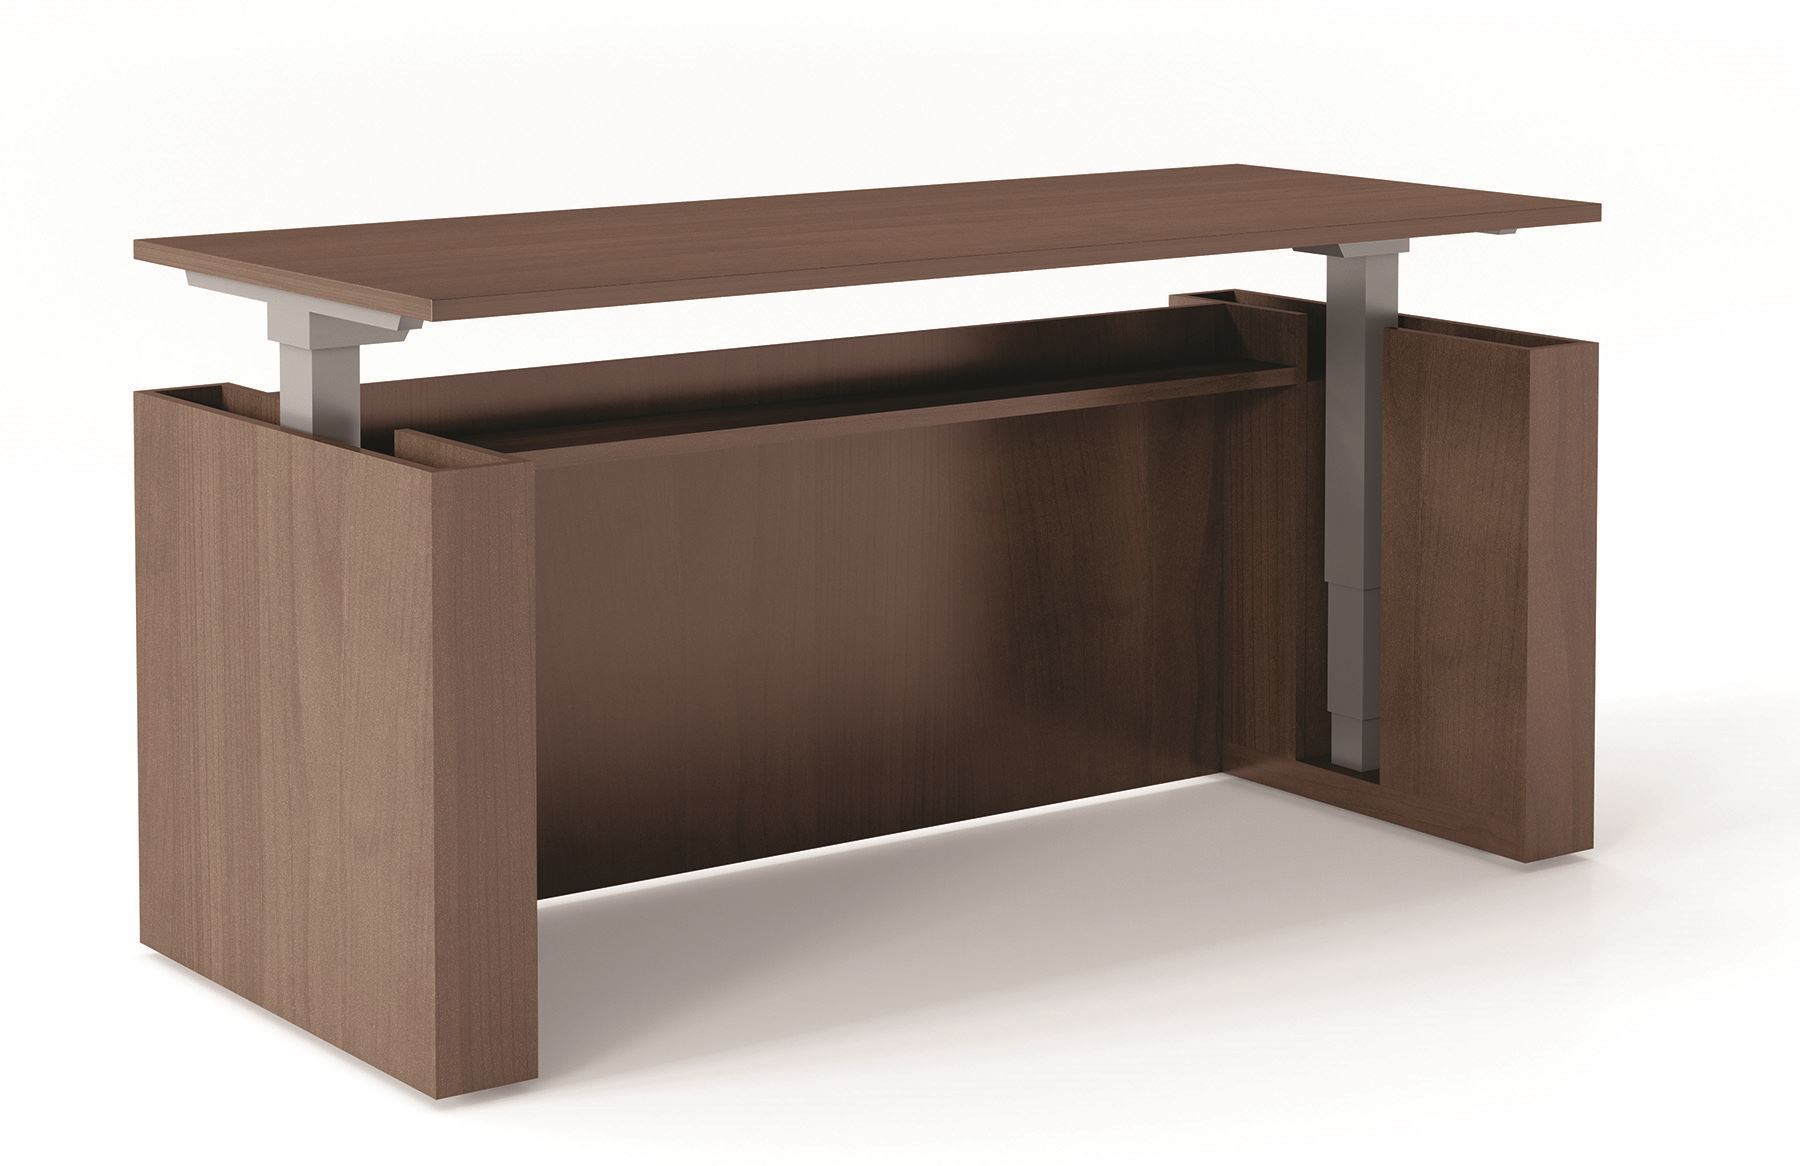 Premiera/Office Source Executive Height Adjustable Desk